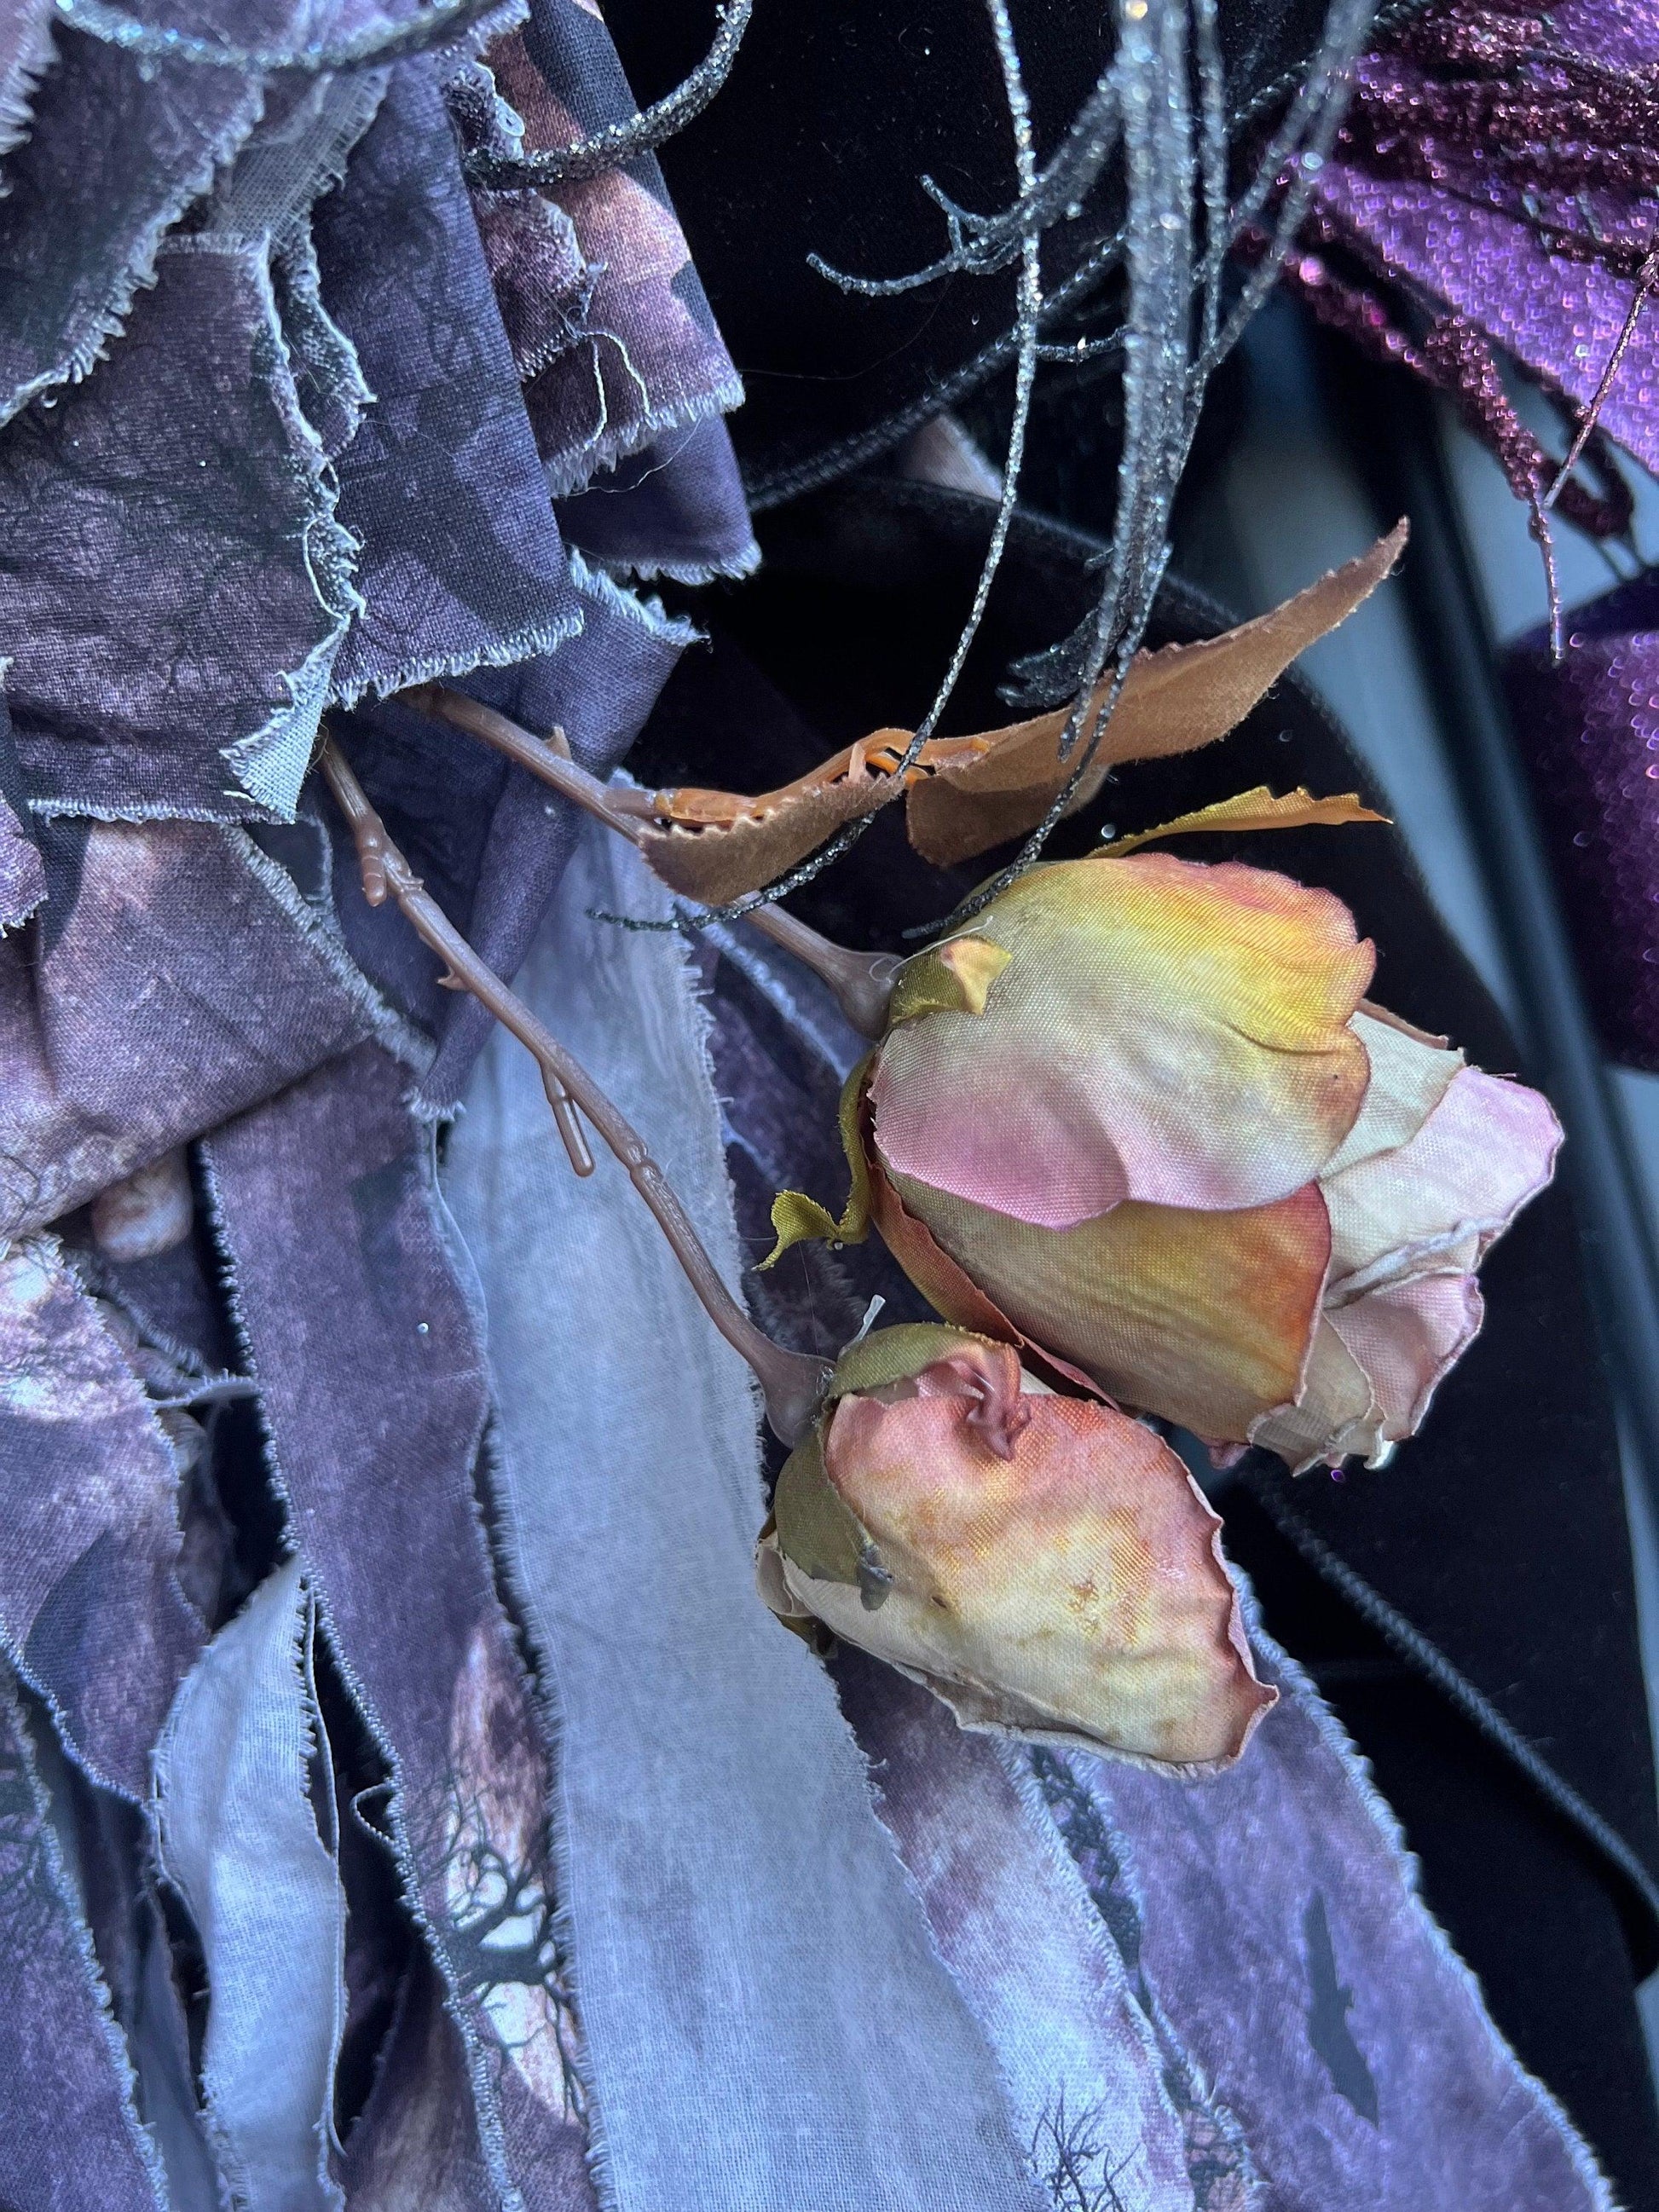 Halloween Wreath - Burlap and Bling Decor